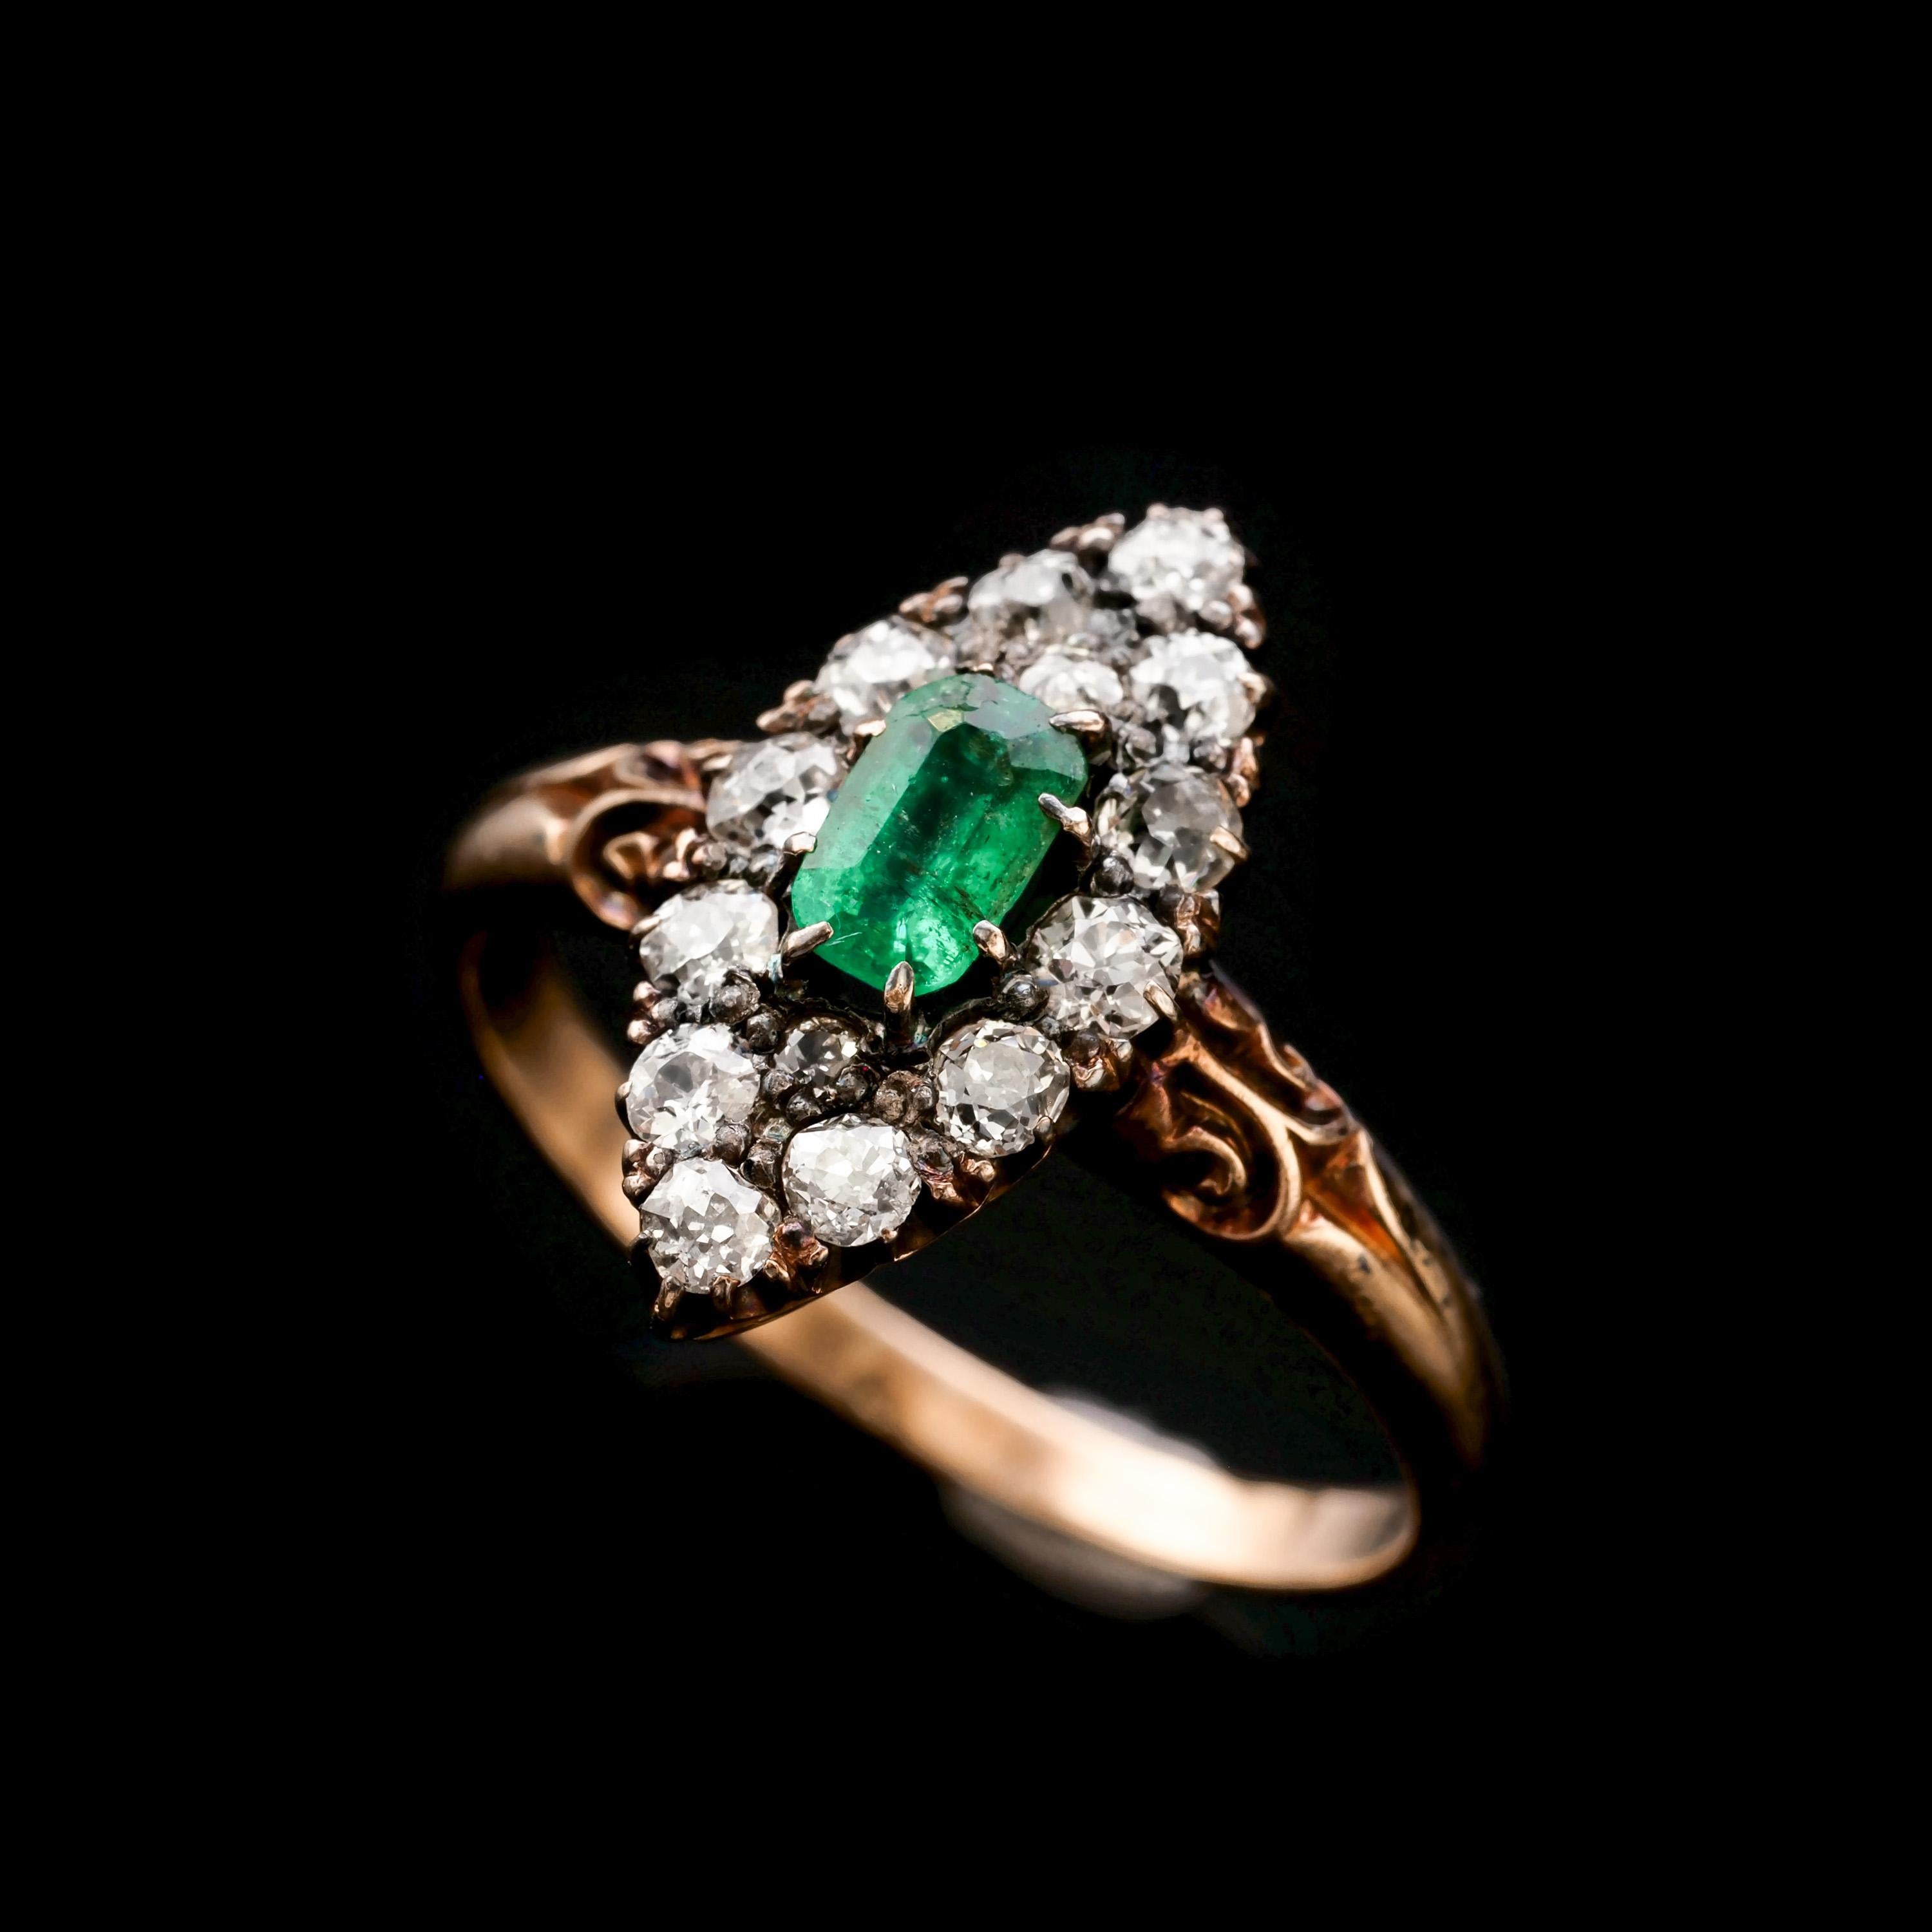 Antique Victorian 18K Gold Emerald & Diamond Navette Cluster Ring - c.1880 For Sale 2